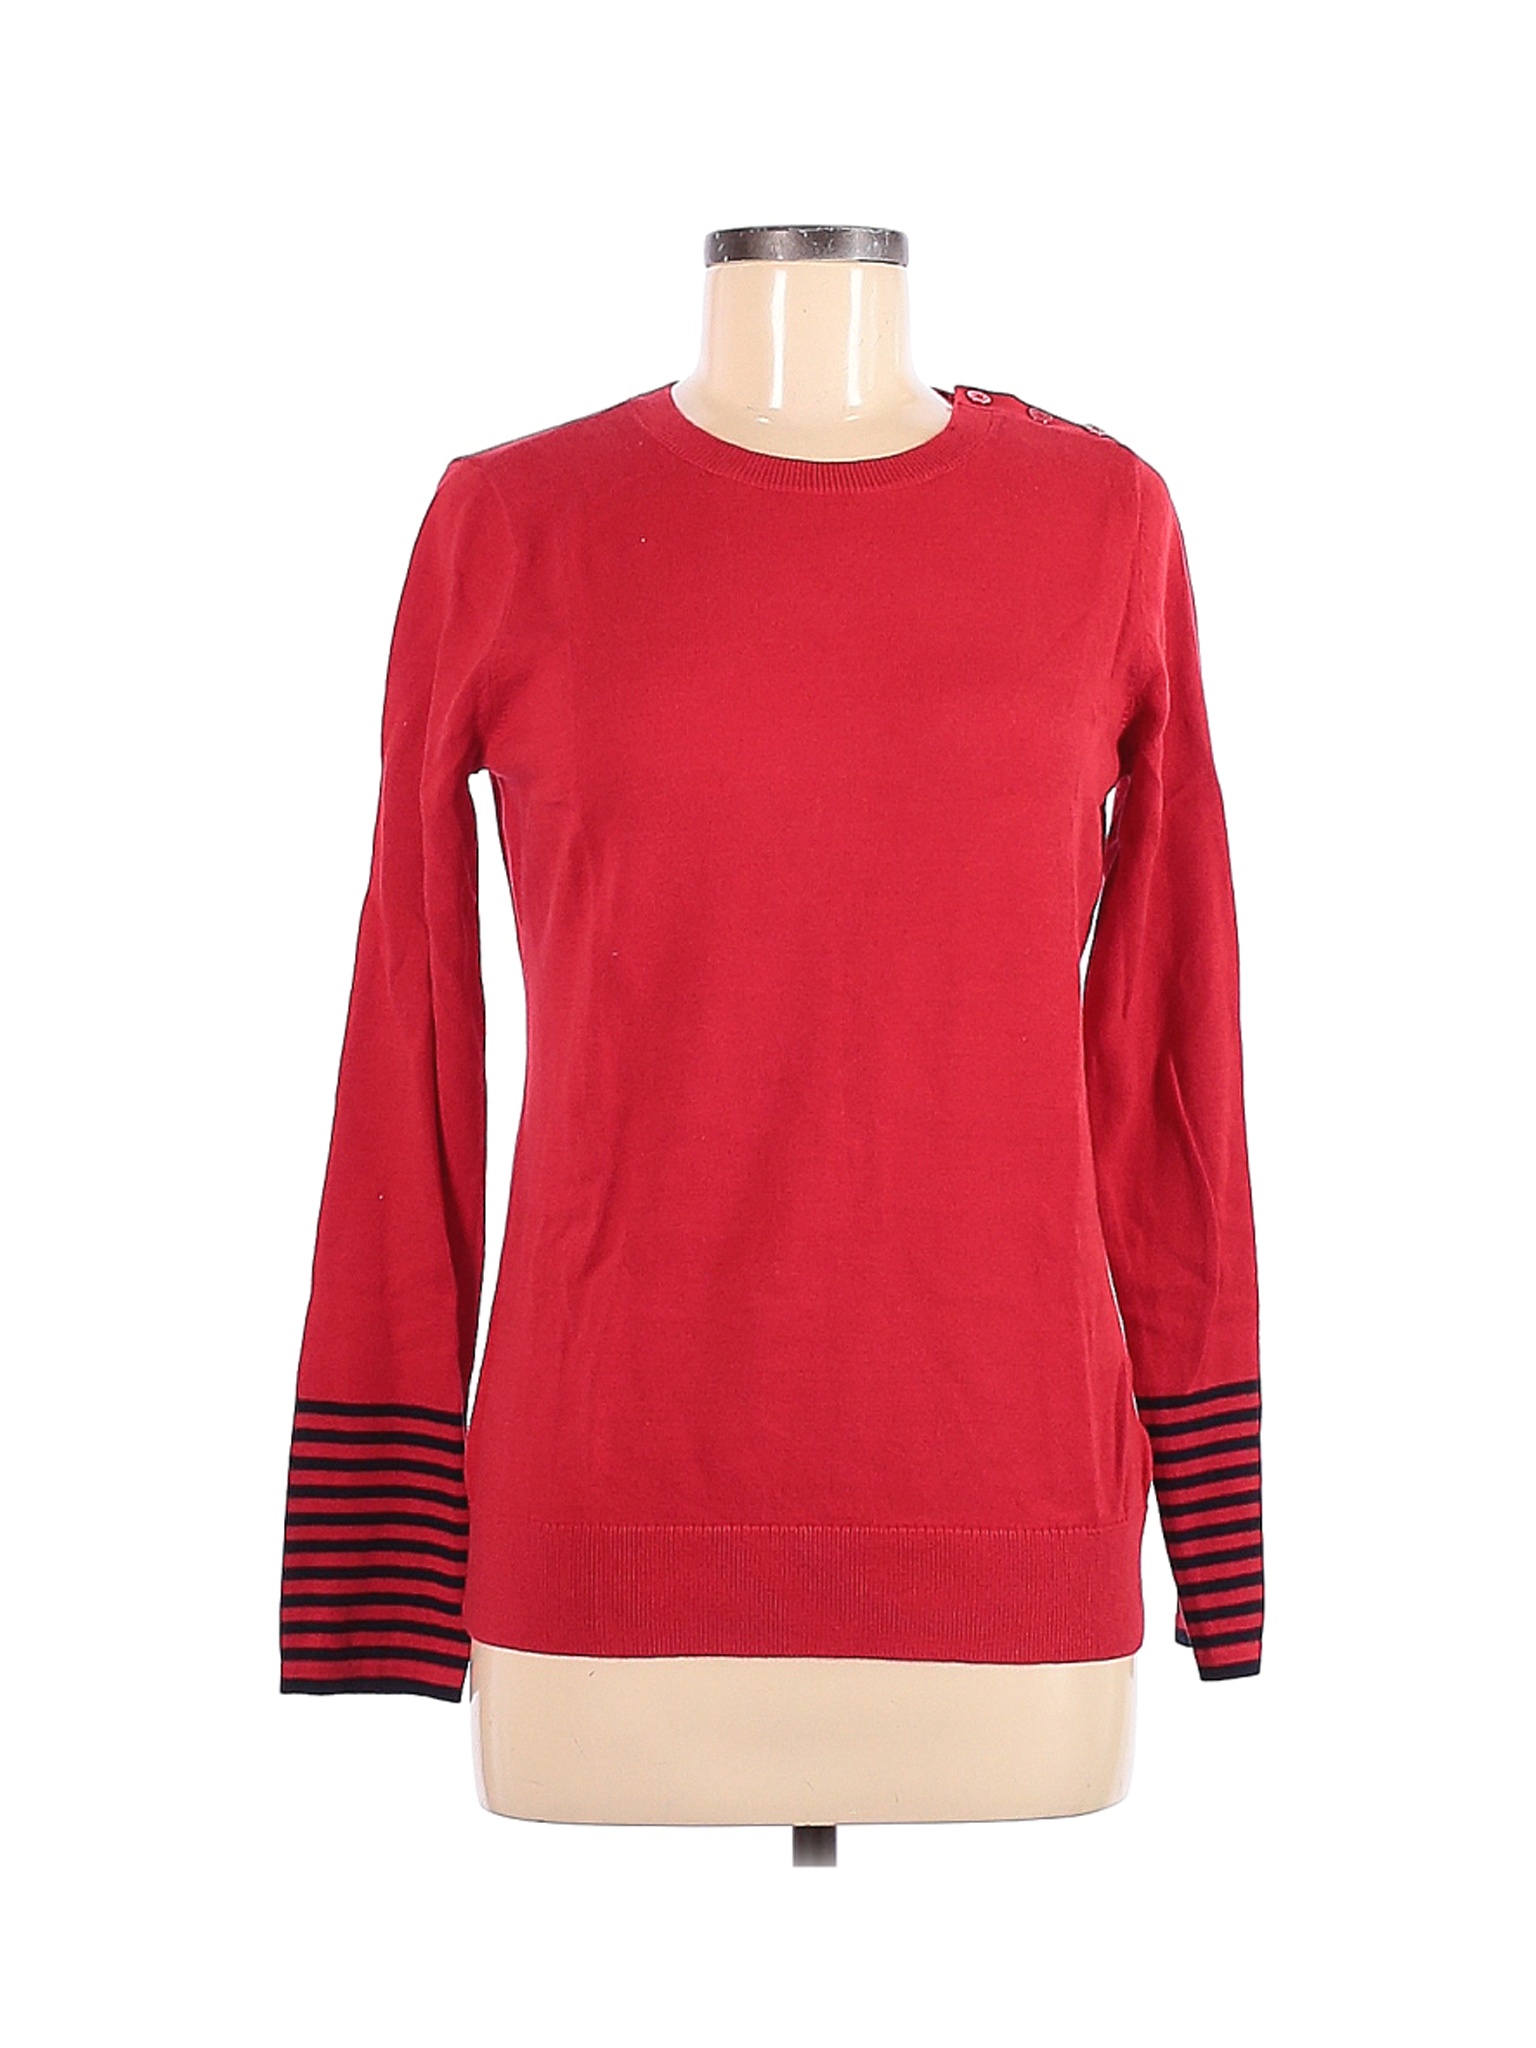 NWT Nautica Women Red Pullover Sweater M | eBay